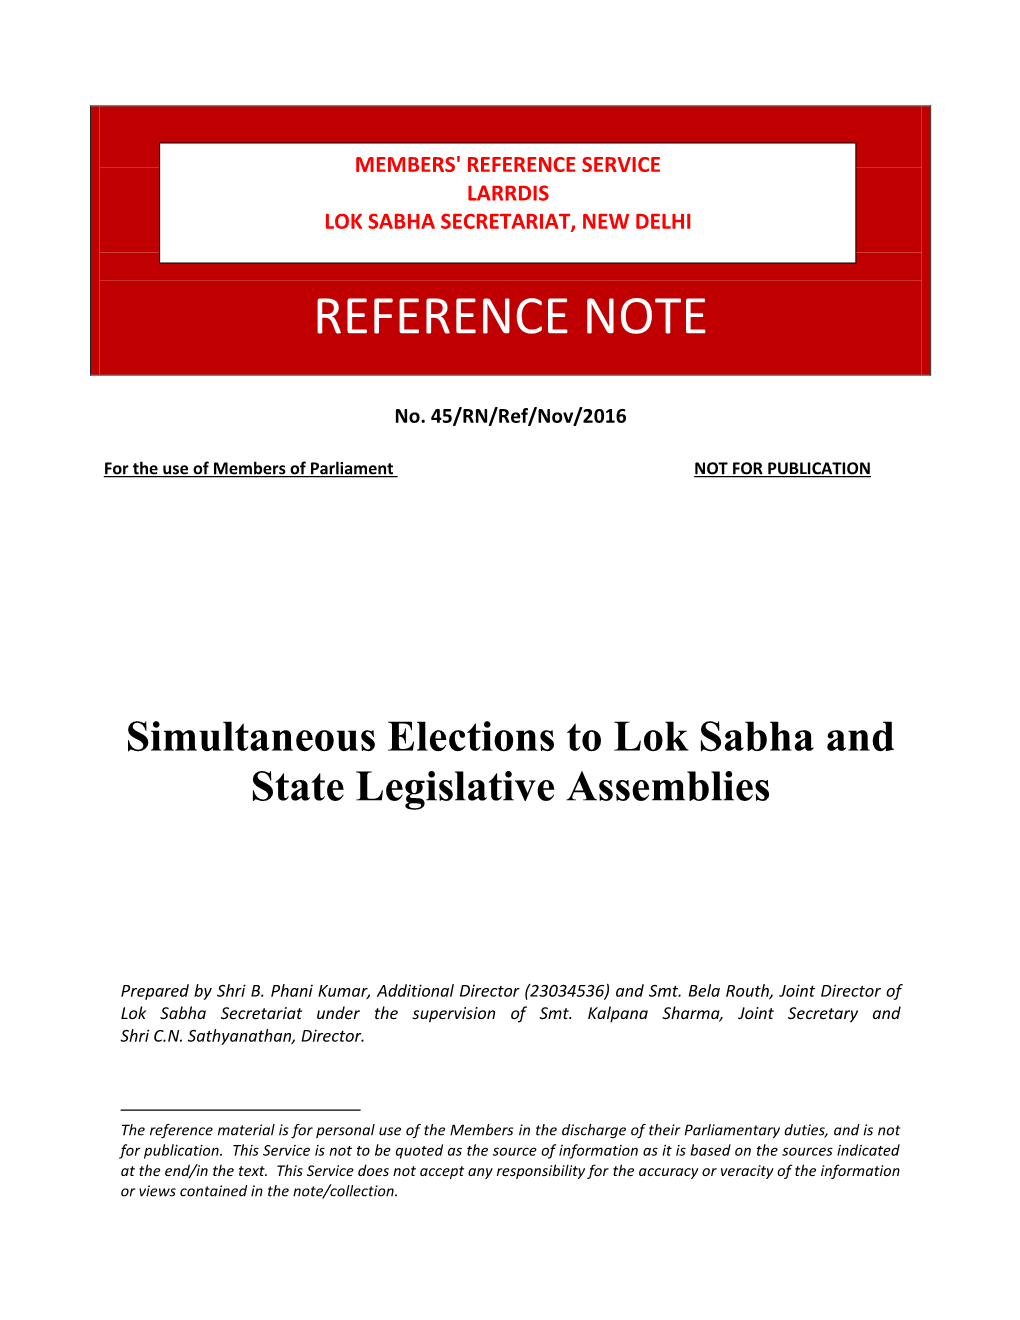 Simultaneous Elections to Lok Sabha and State Legislative Assemblies